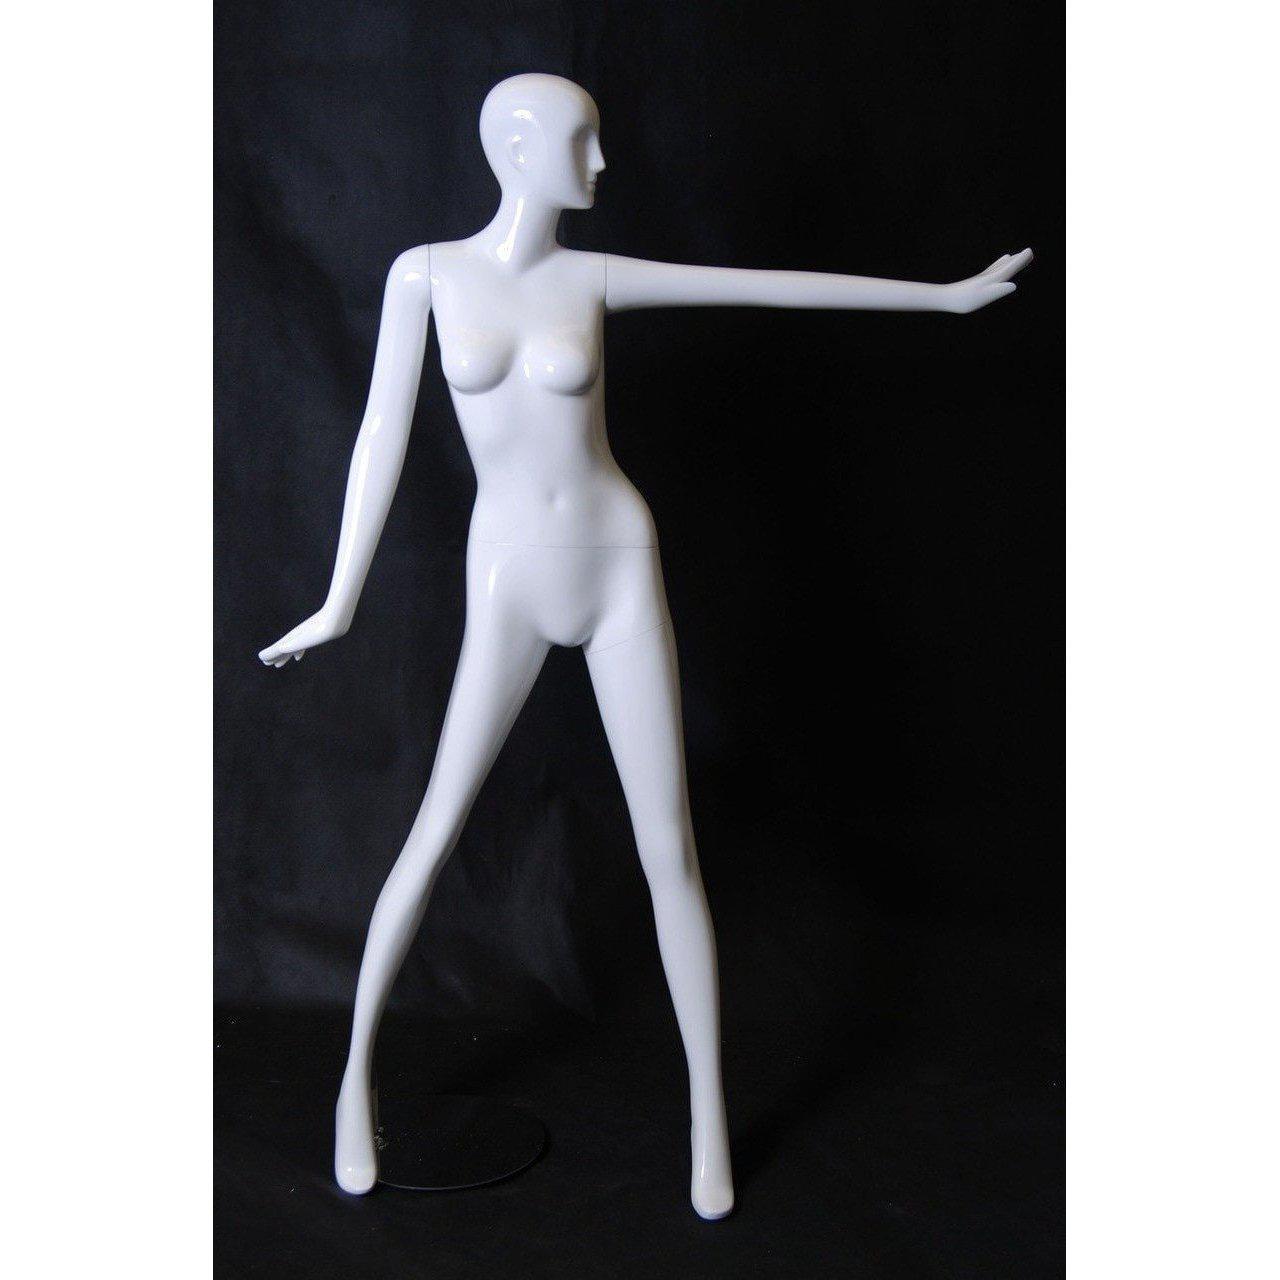 Male Abstract Mannequin MM-WEN4EG